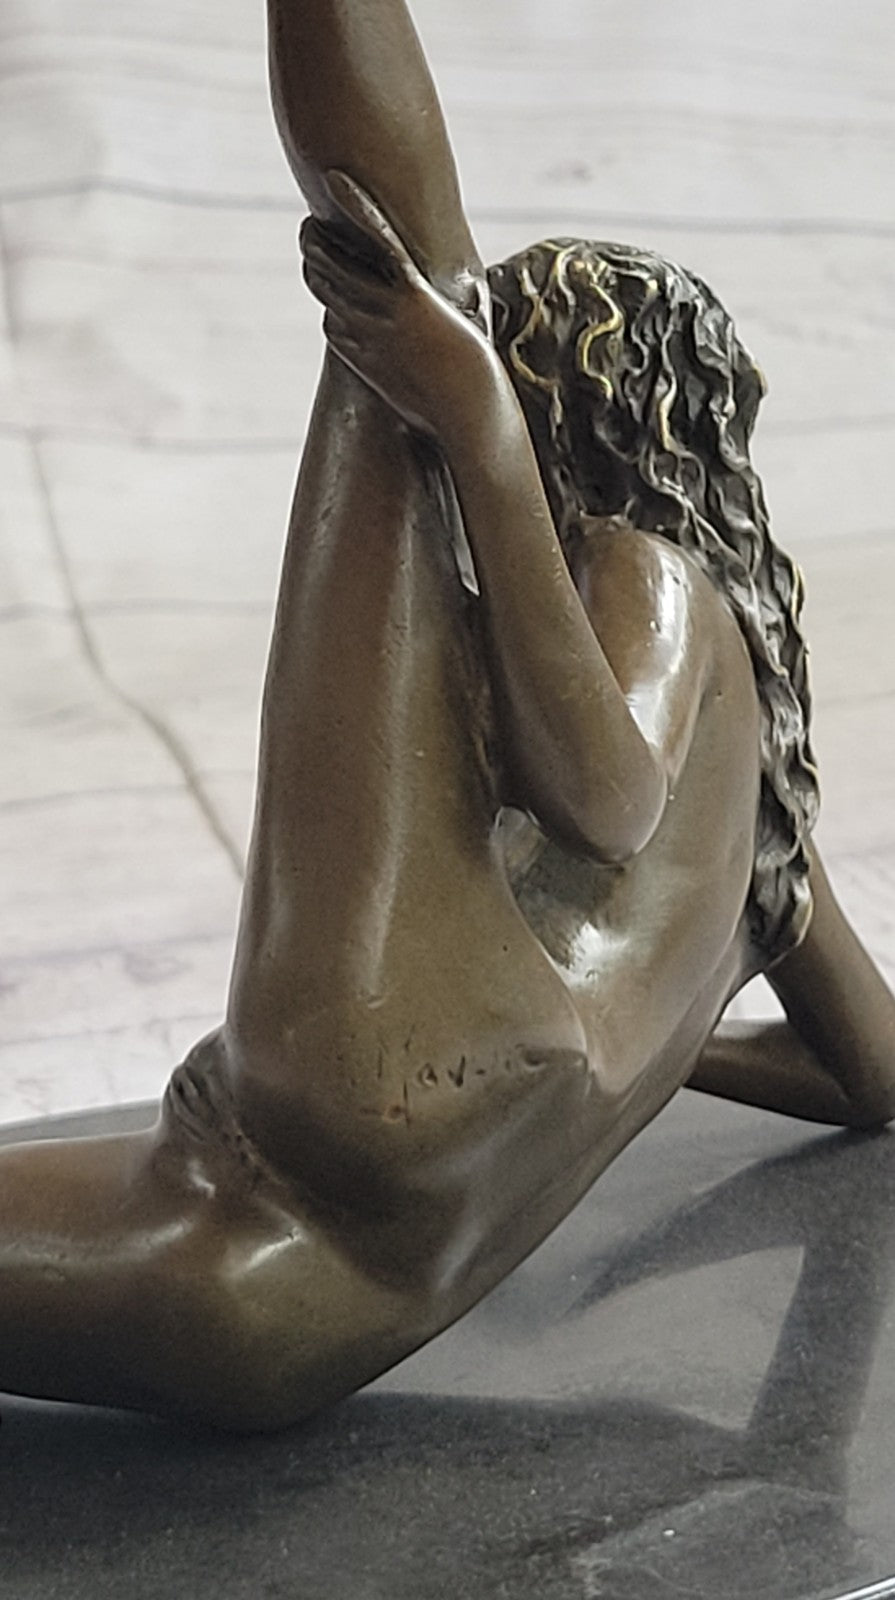 Handcrafted Nude Woman Exposing Herself Bronze Sculpture Marble Base Figurine